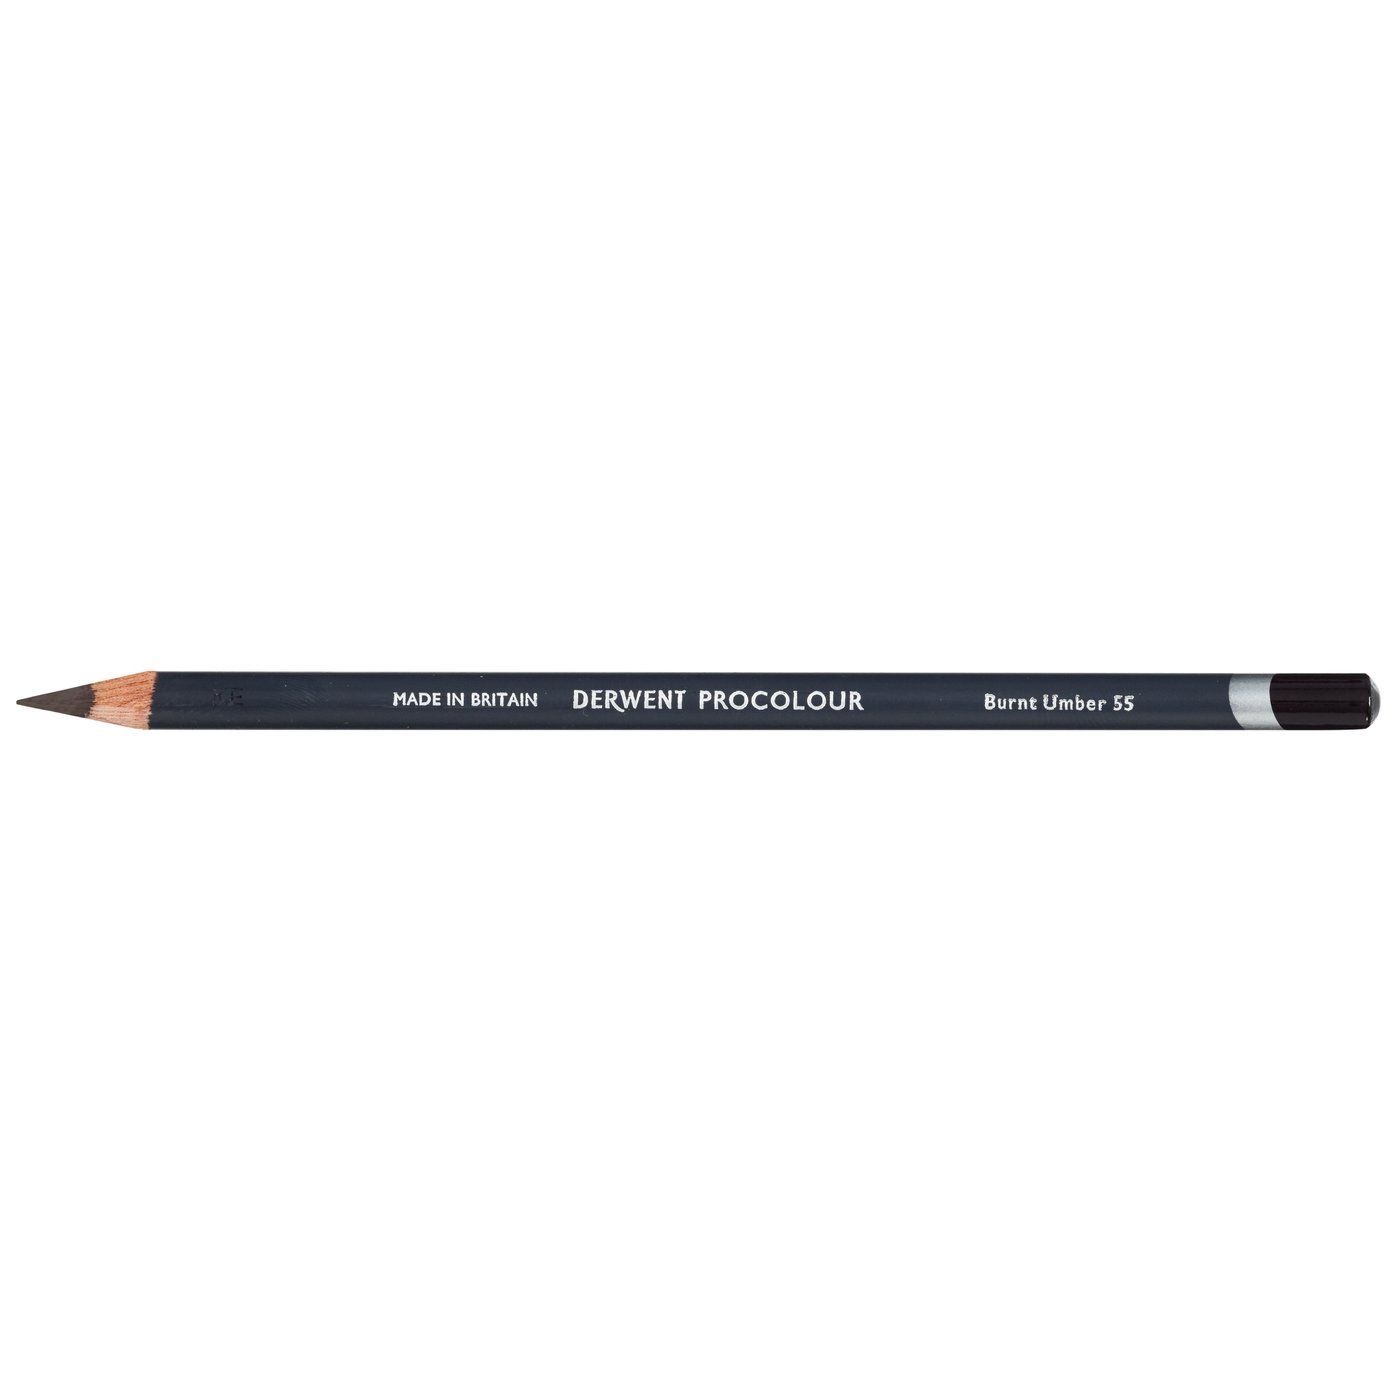 Derwent Procolour Pencil - 55 Burnt Umber